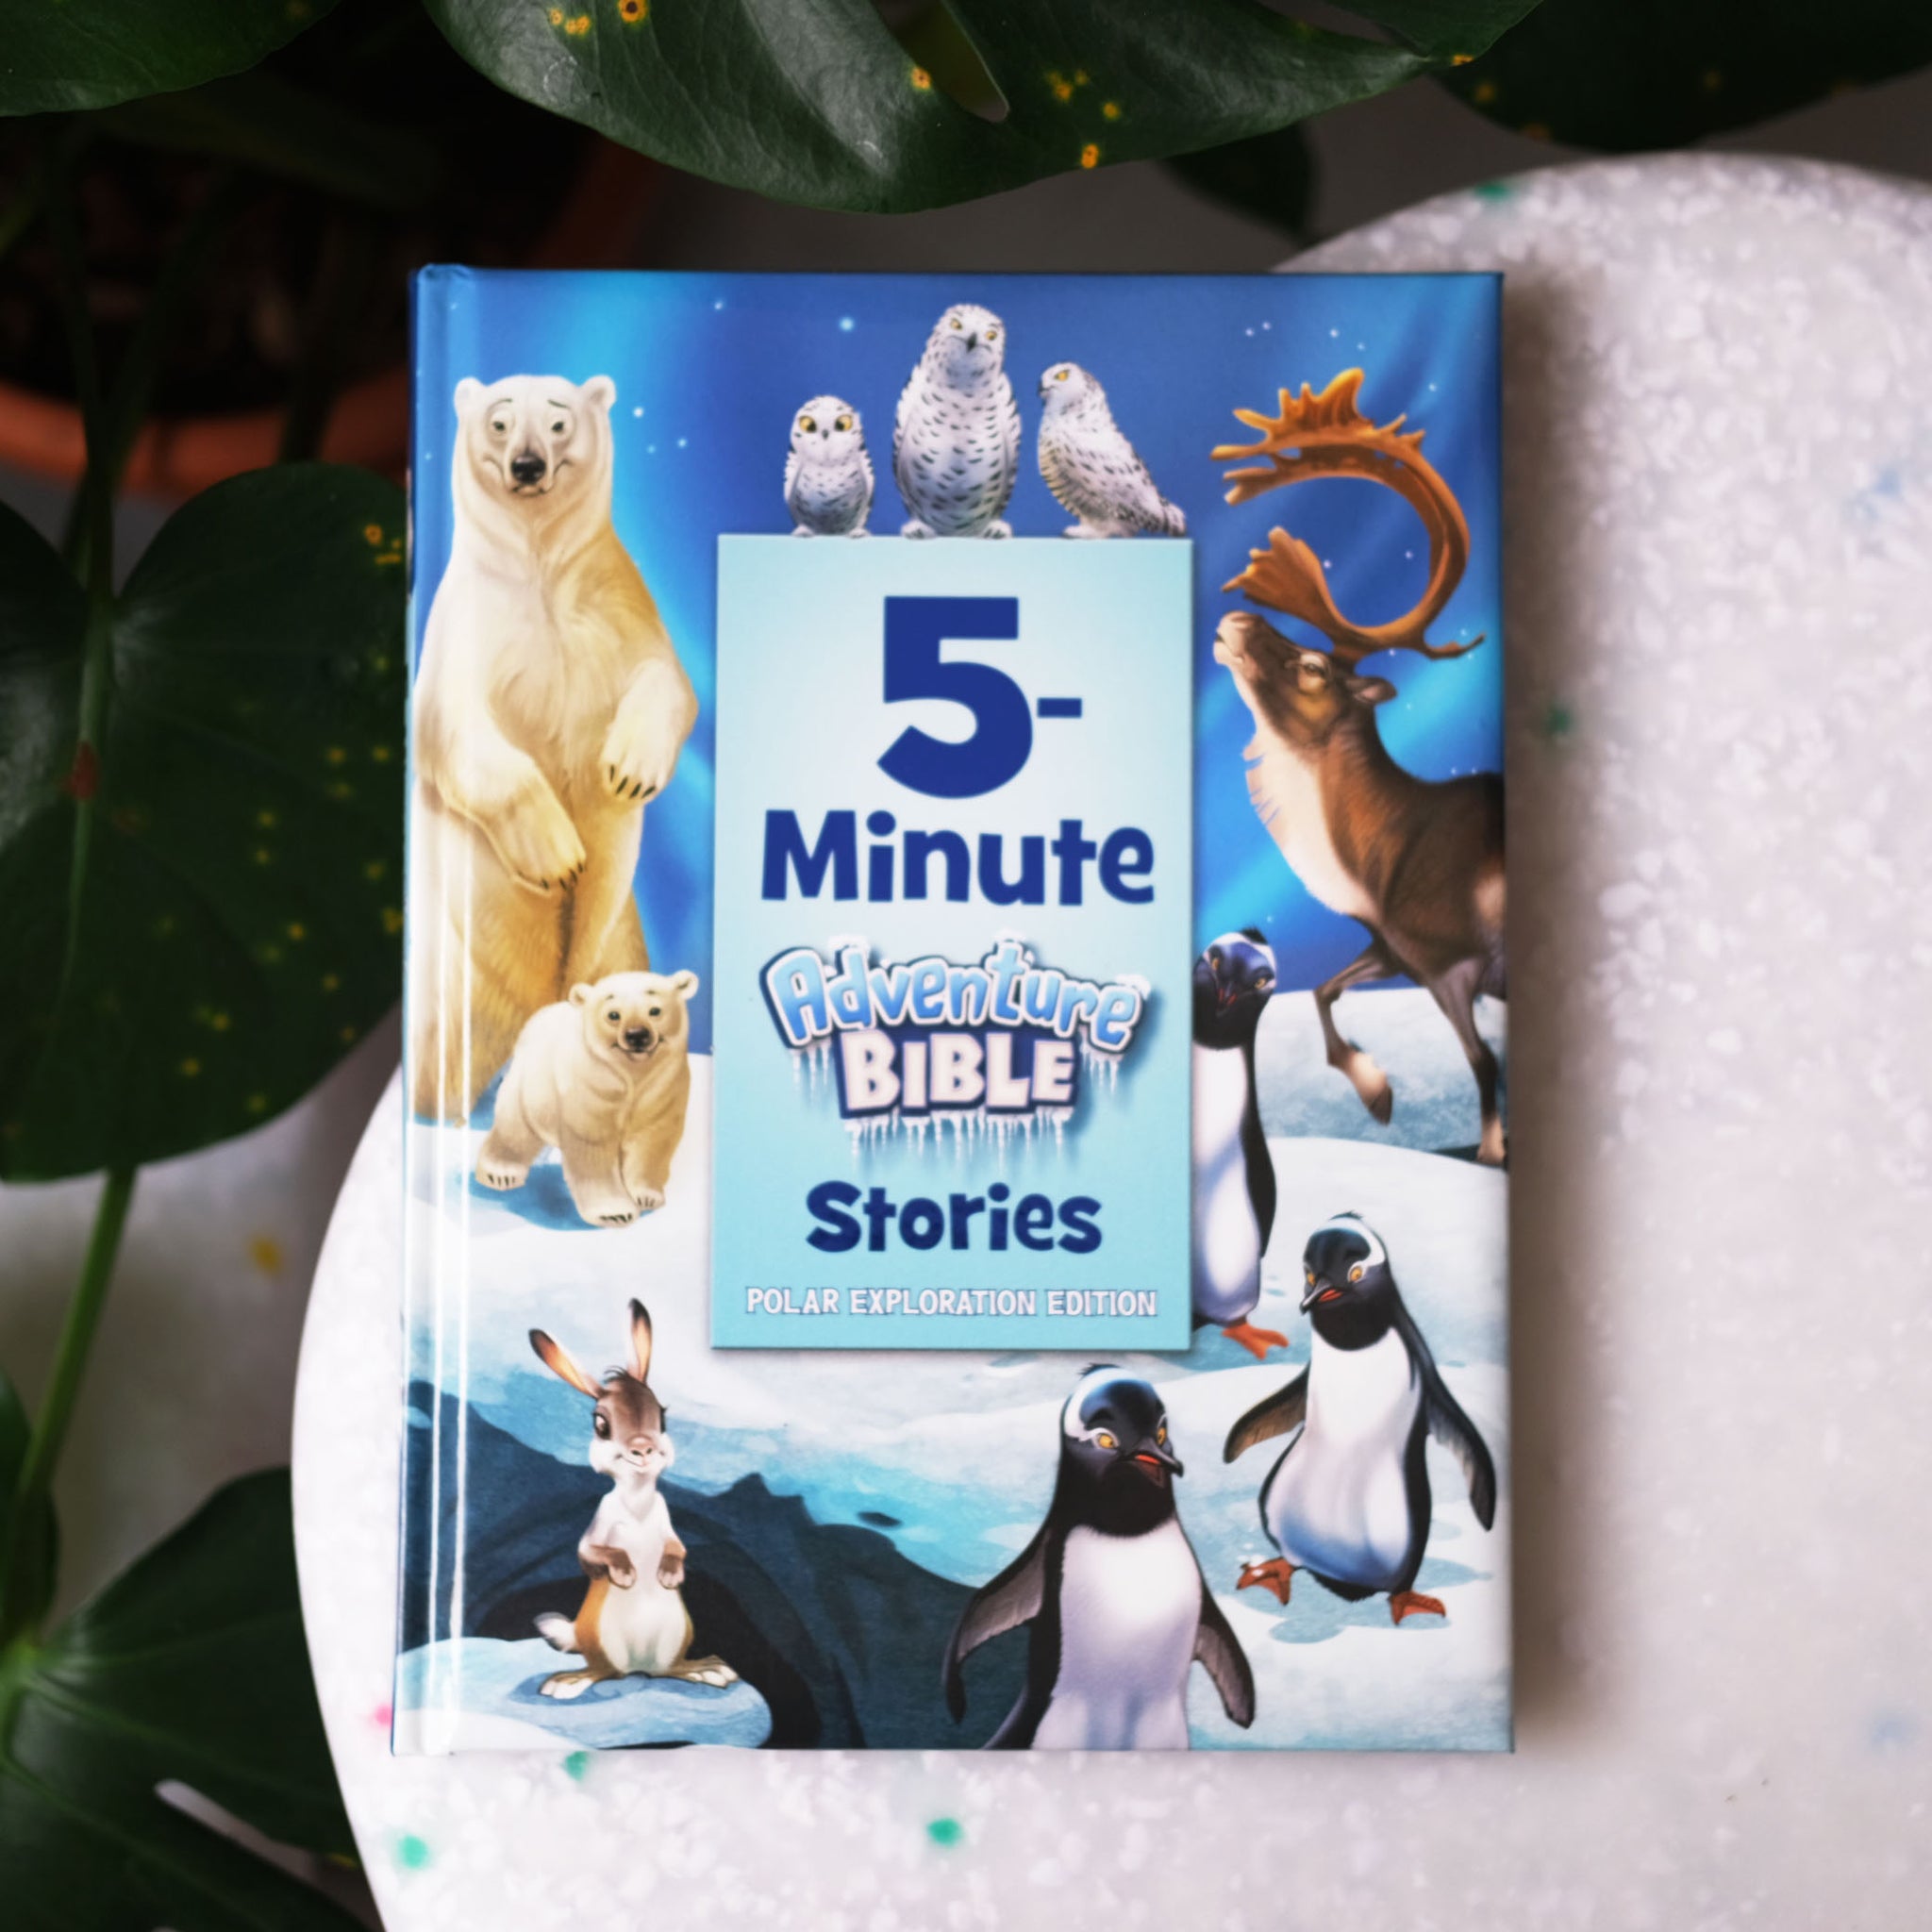 5-Minute Adventure Bible Stories, Polar Exploration Edition (Hardcover)